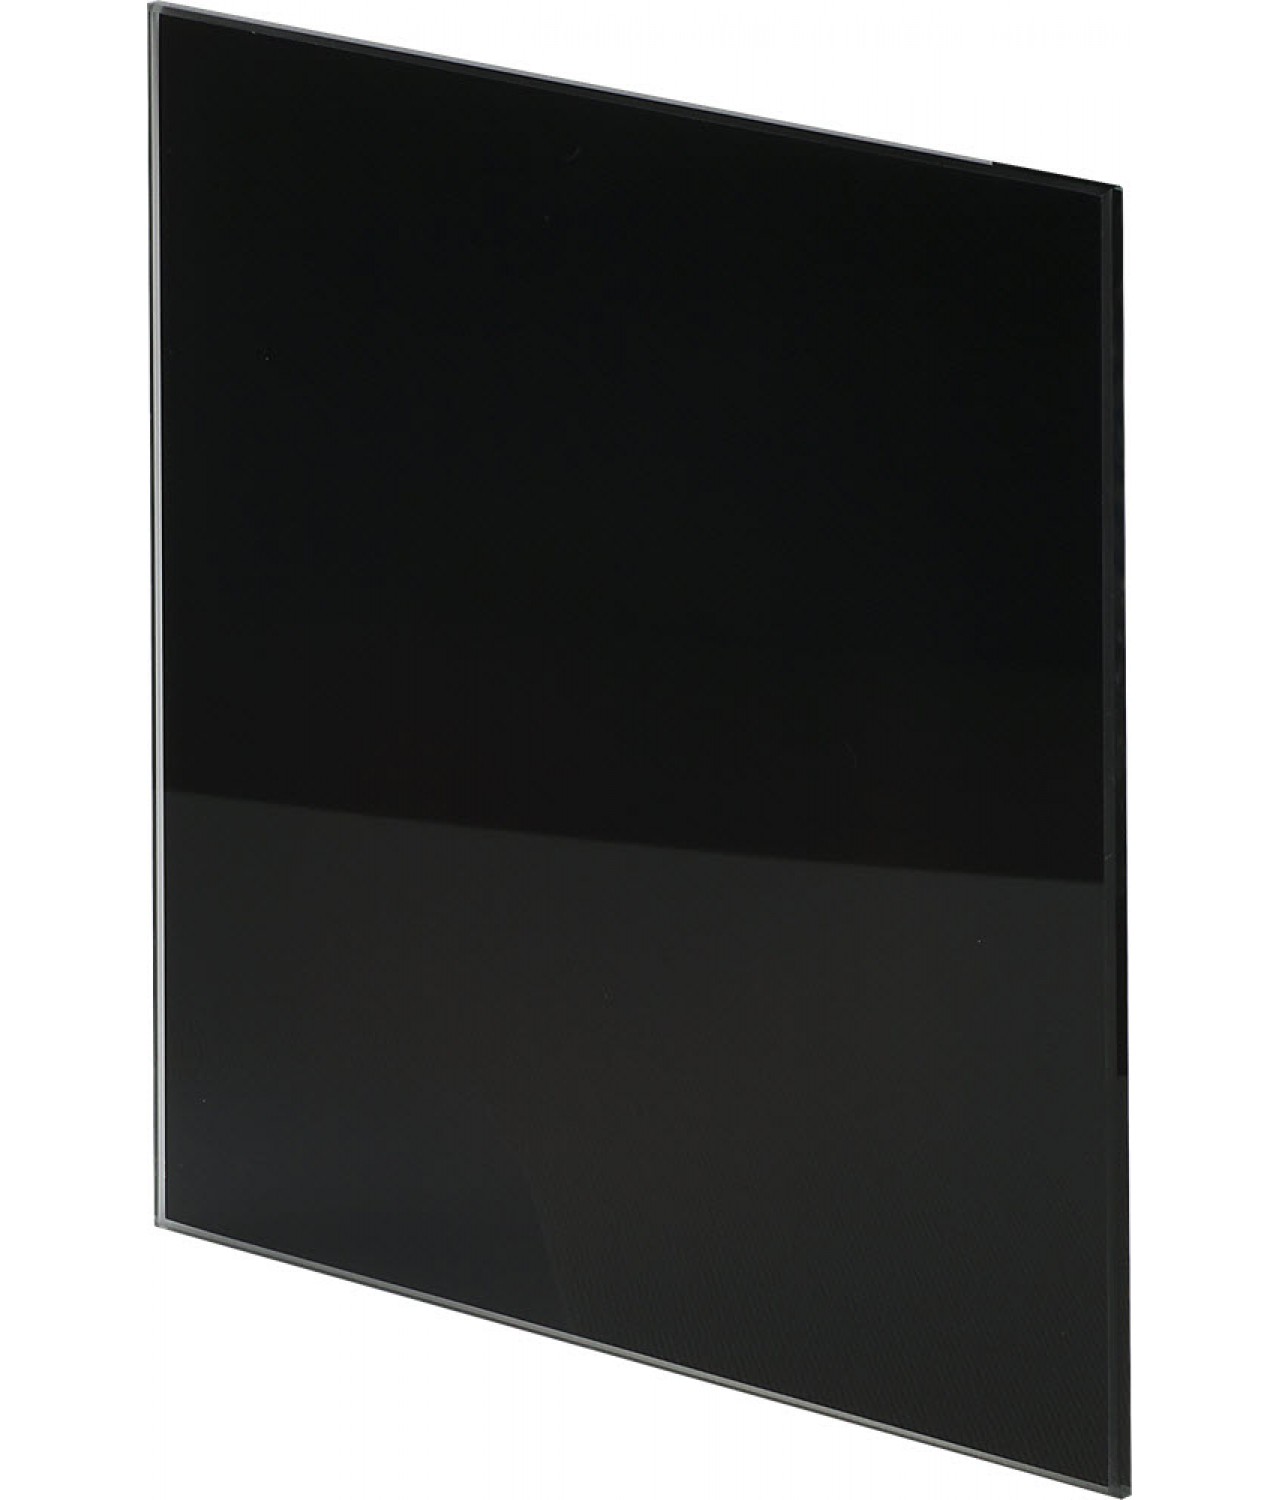 Interjerinis dangtelis PTGB125P - TRAX GLASS black glossy